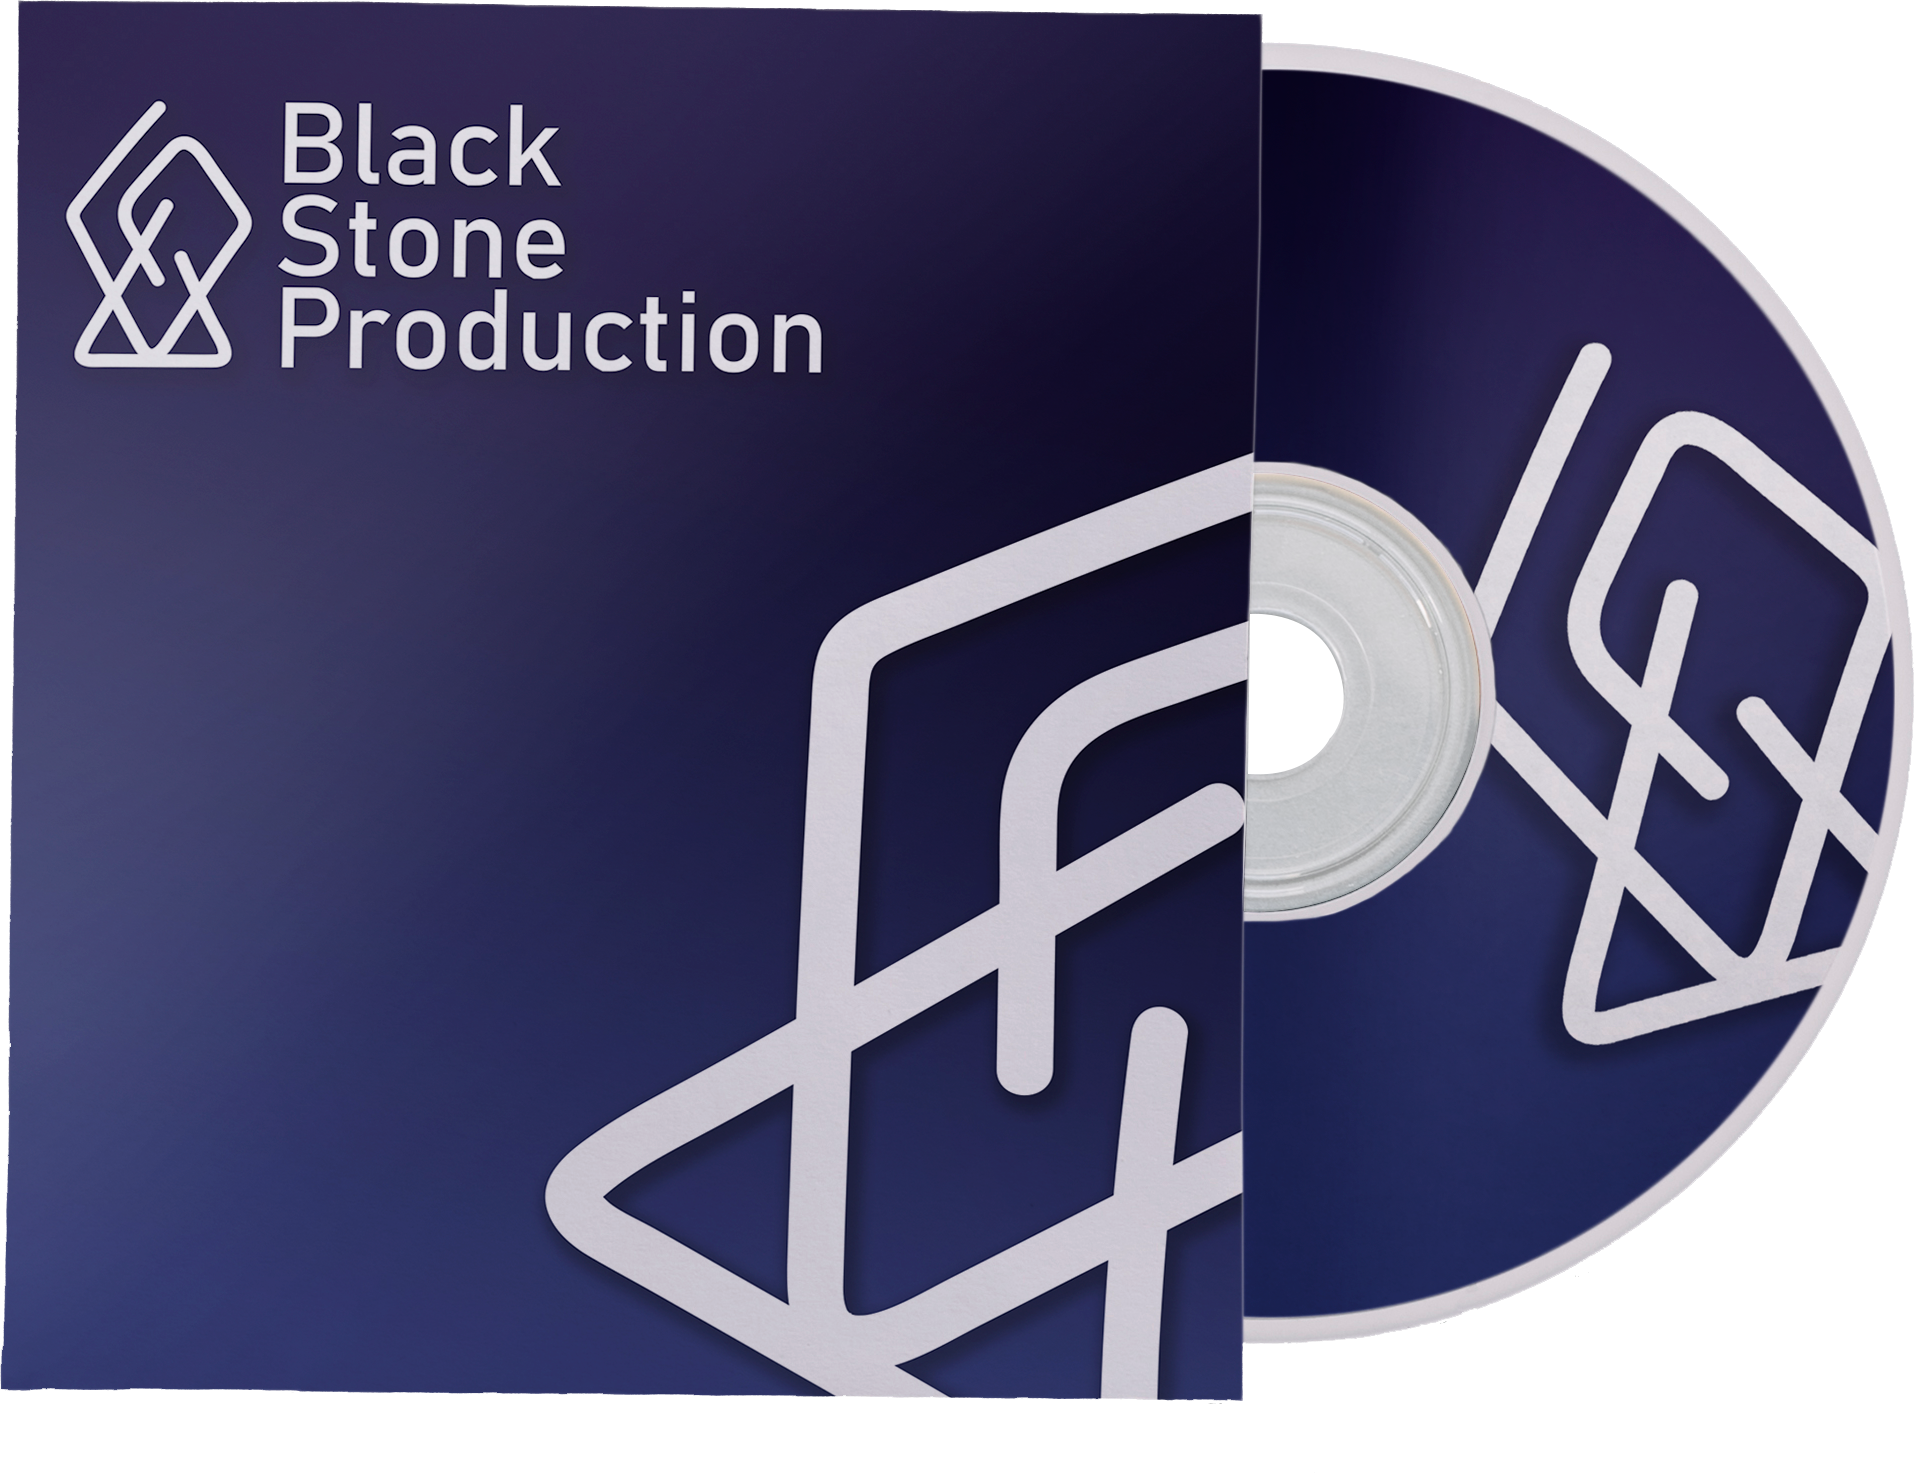 Black Stone Production